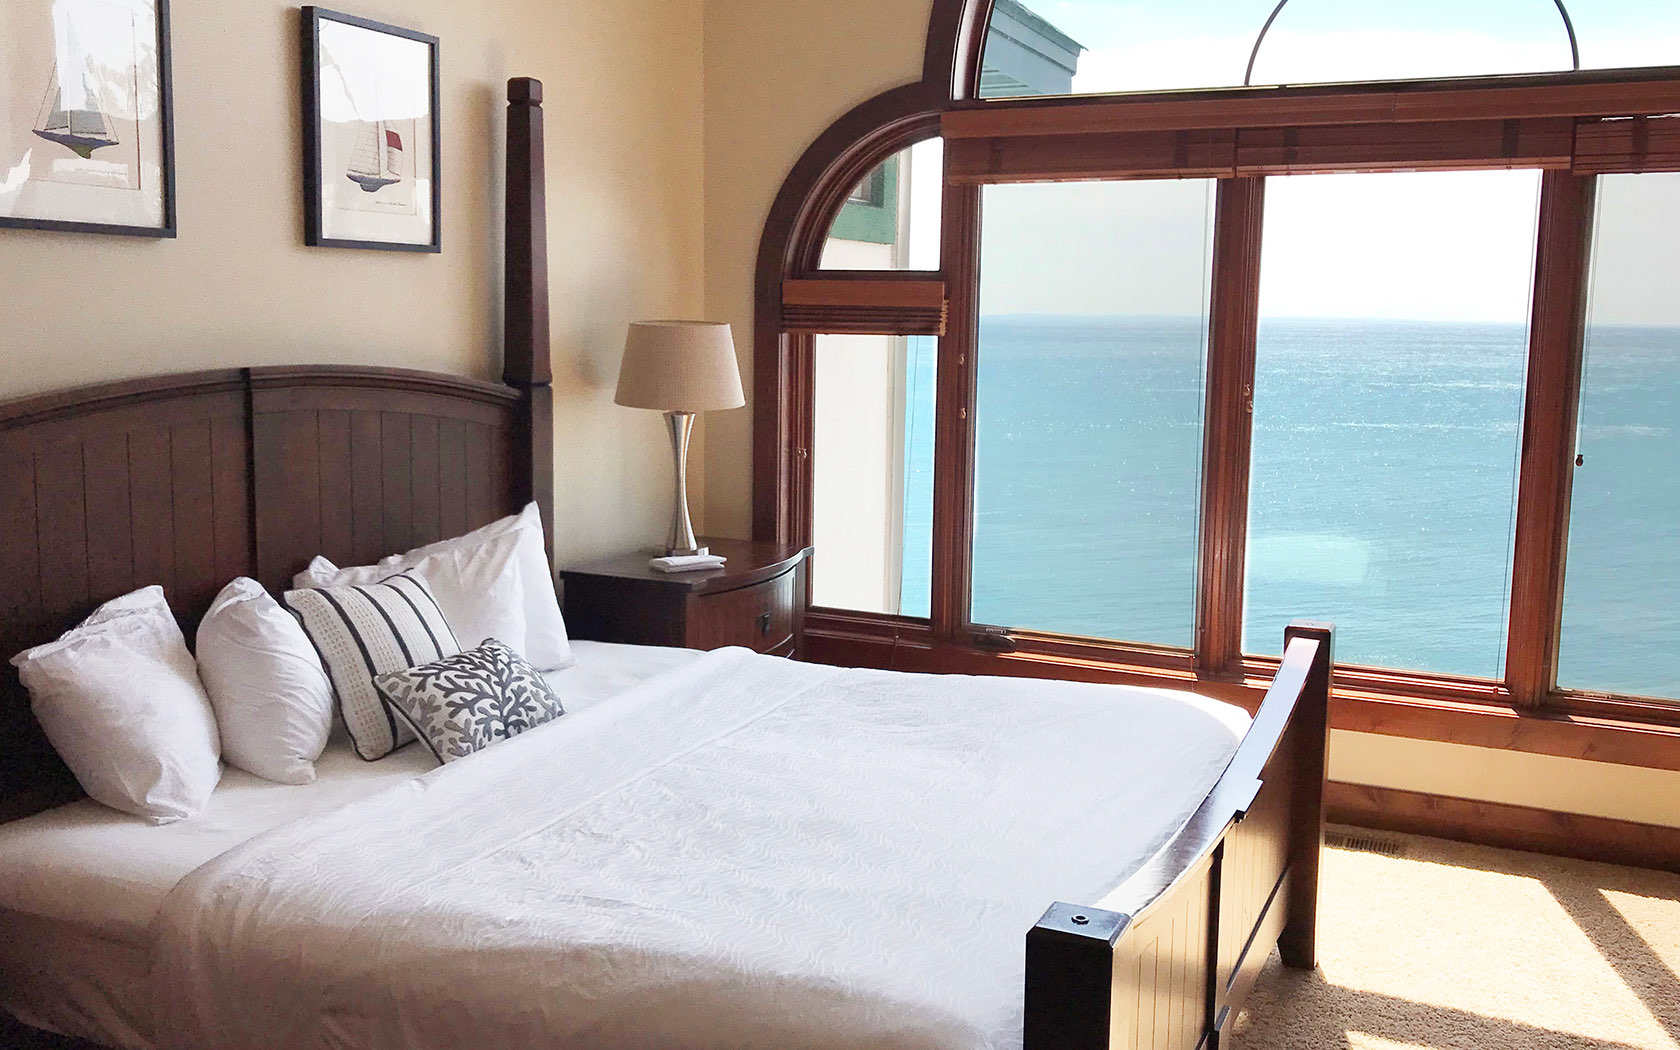 burlington bay elegant bedroom overlooking the lake